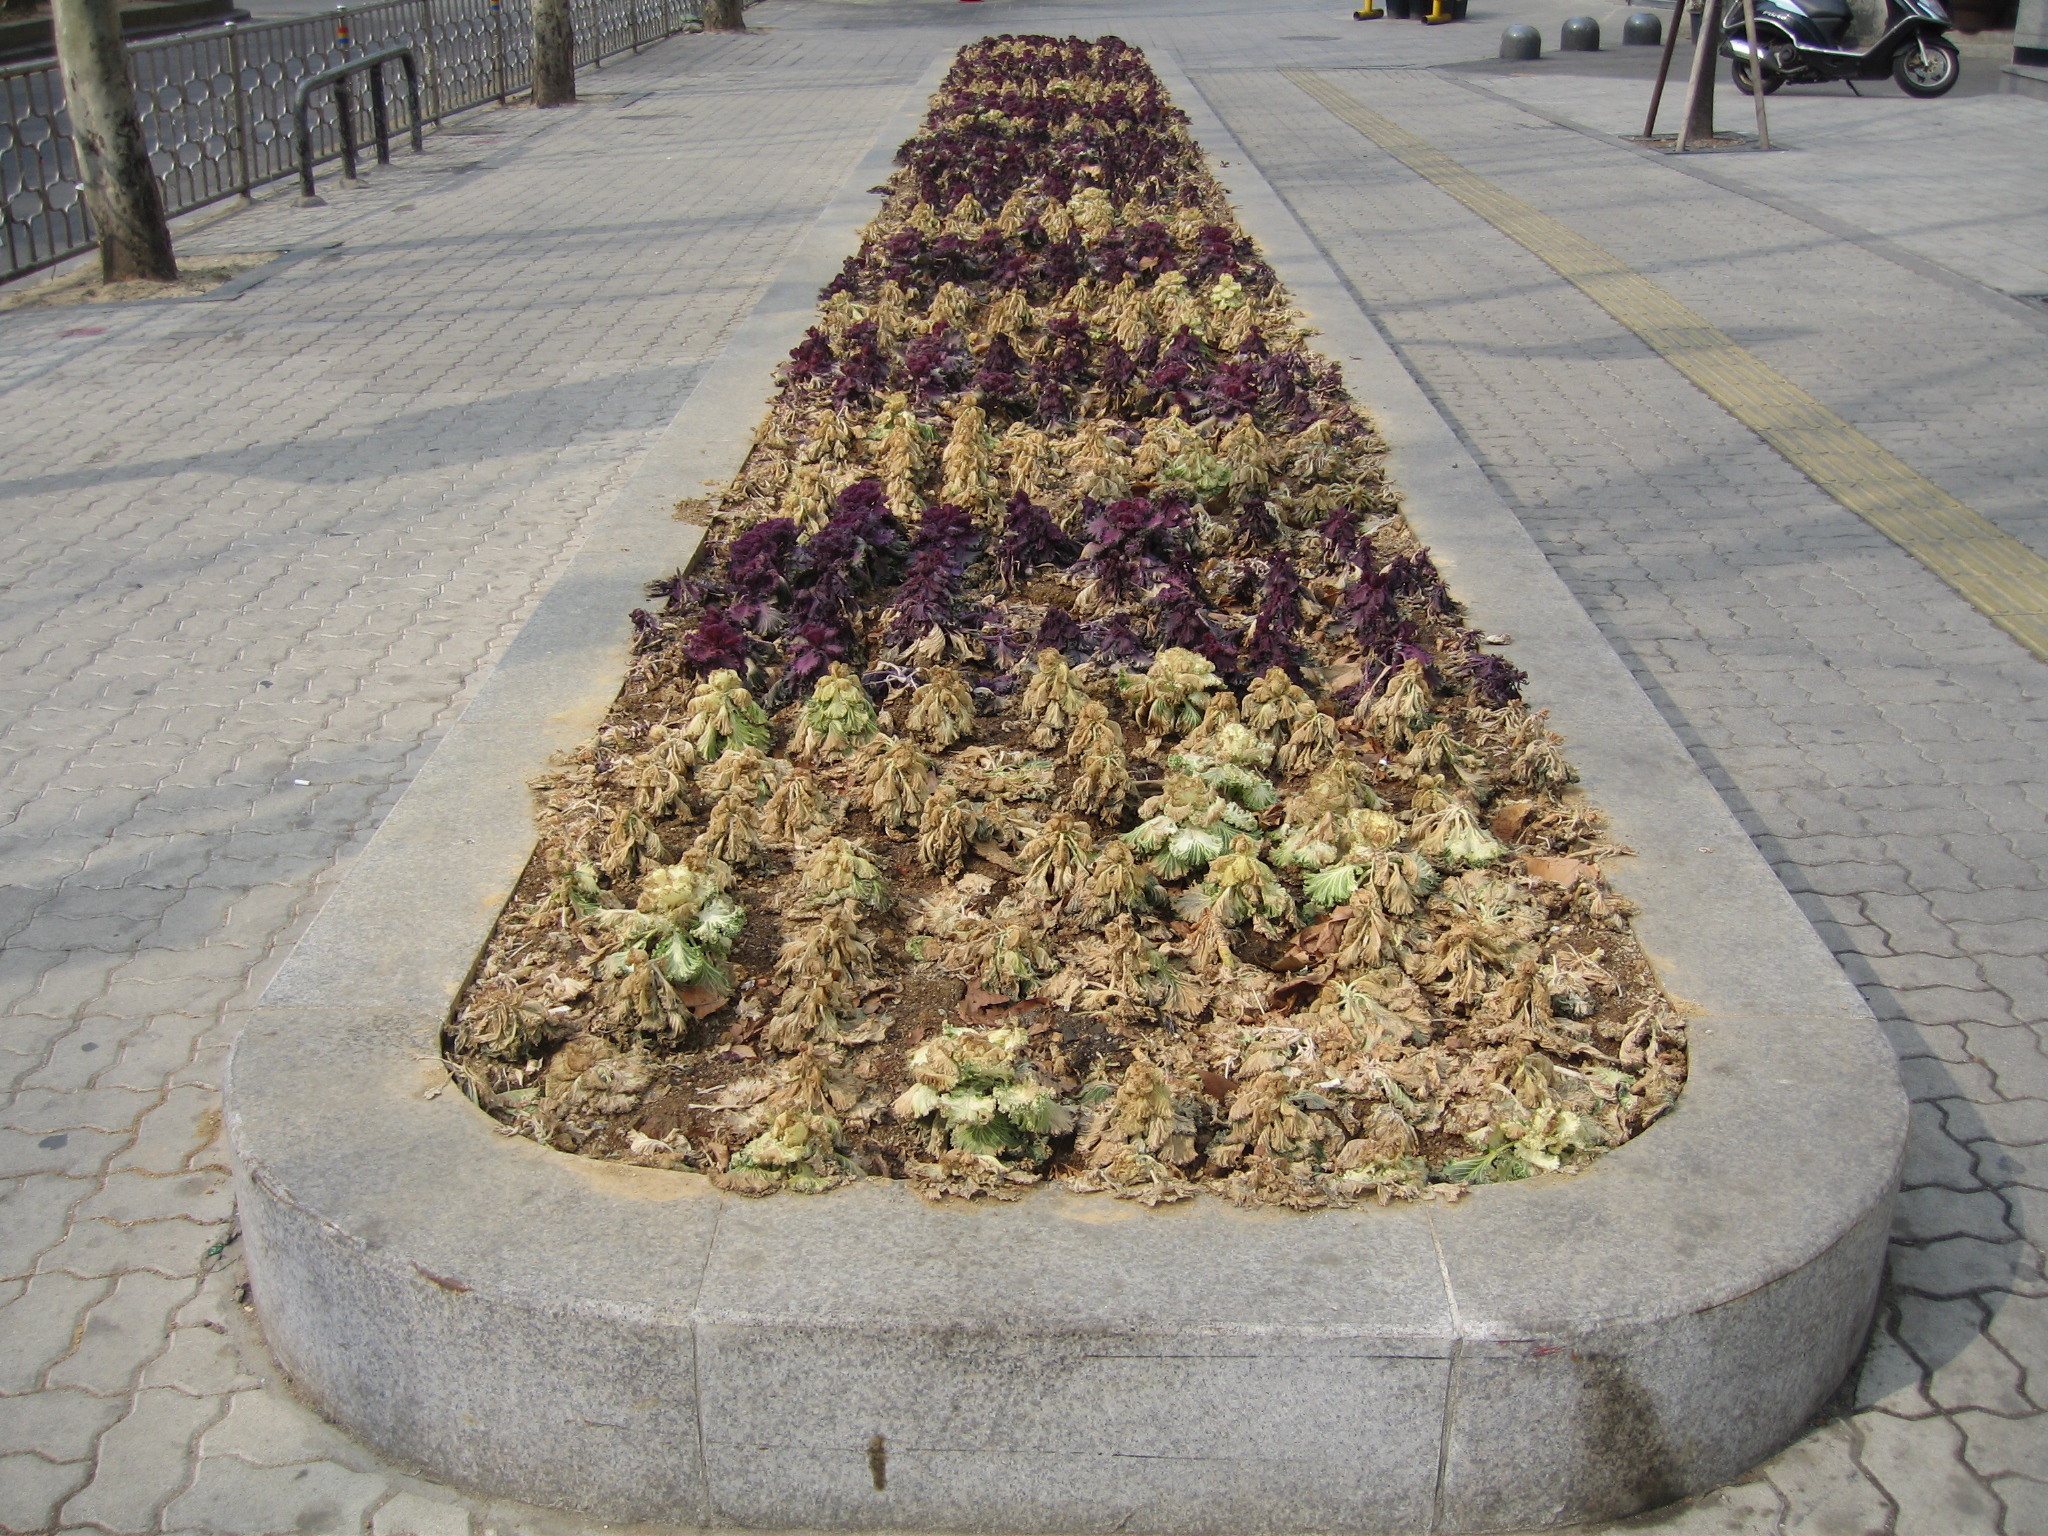 a long triangular arrangement of plants on the sidewalk